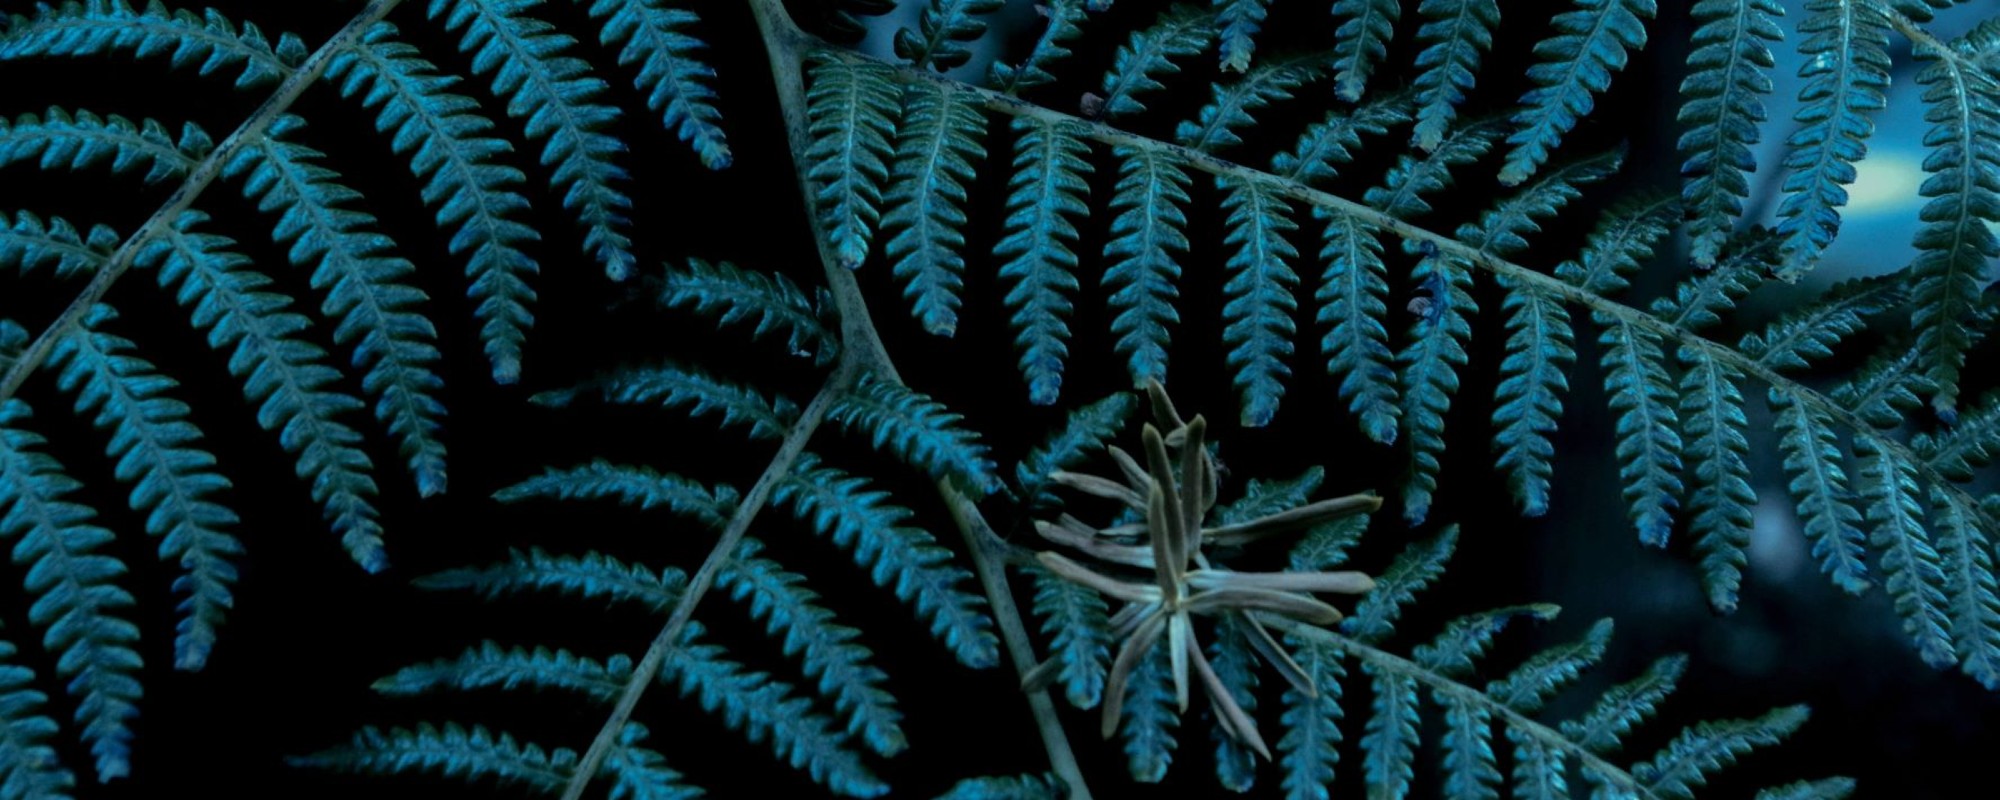 New Zealand native fern